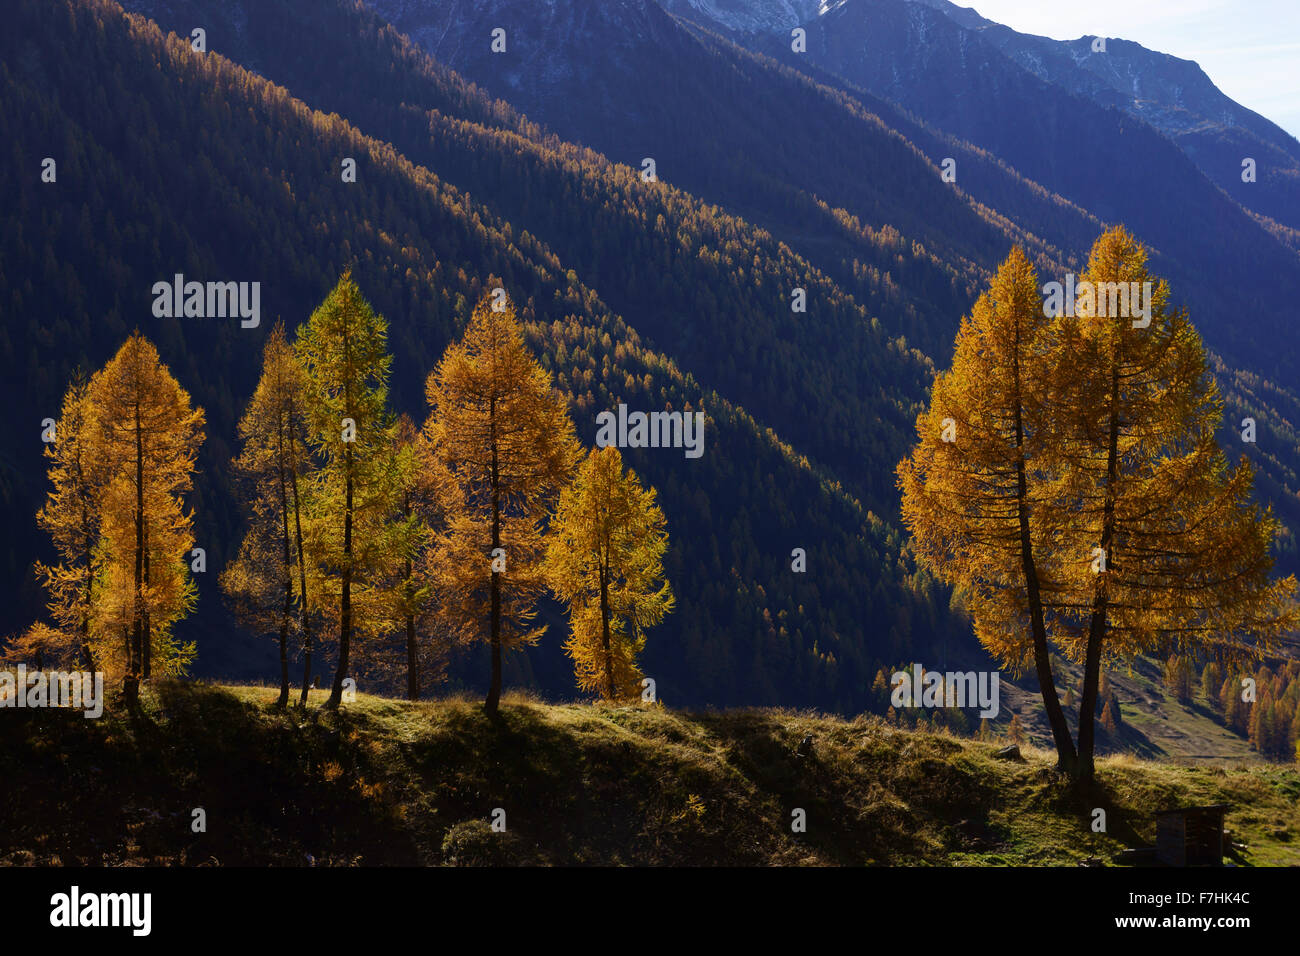 Larch trees in autumn with yellow needles, Lötschental, Valais alps, Switzerlande Stock Photo